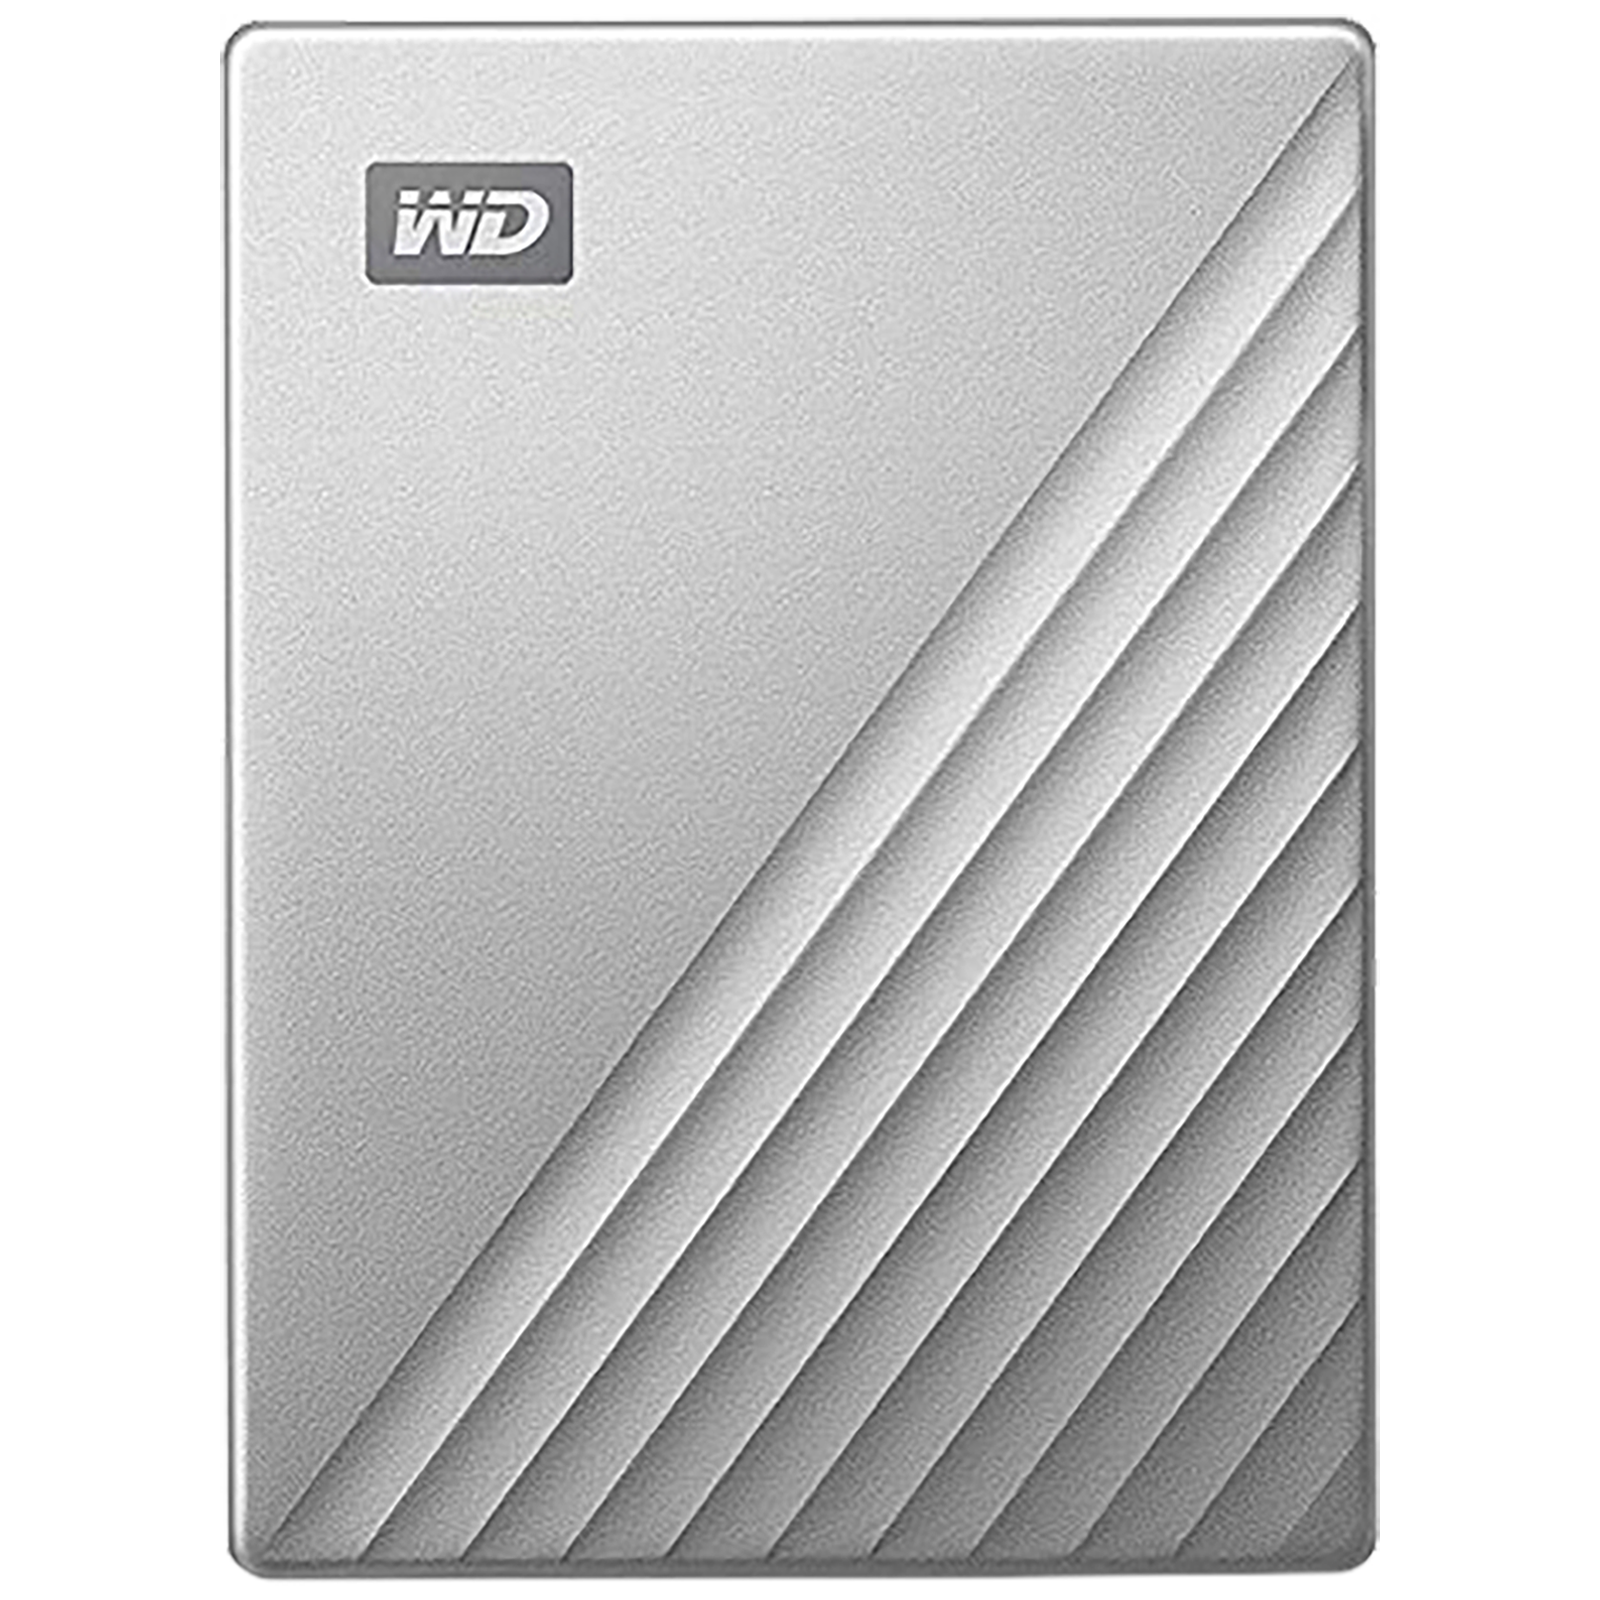 WD - Western Digital My Passport Ultra 2 TB USB 2.0/3.0 Hard Disk Drive (Automatic Backup, WDBC3C0020BSL-WESN, Silver)